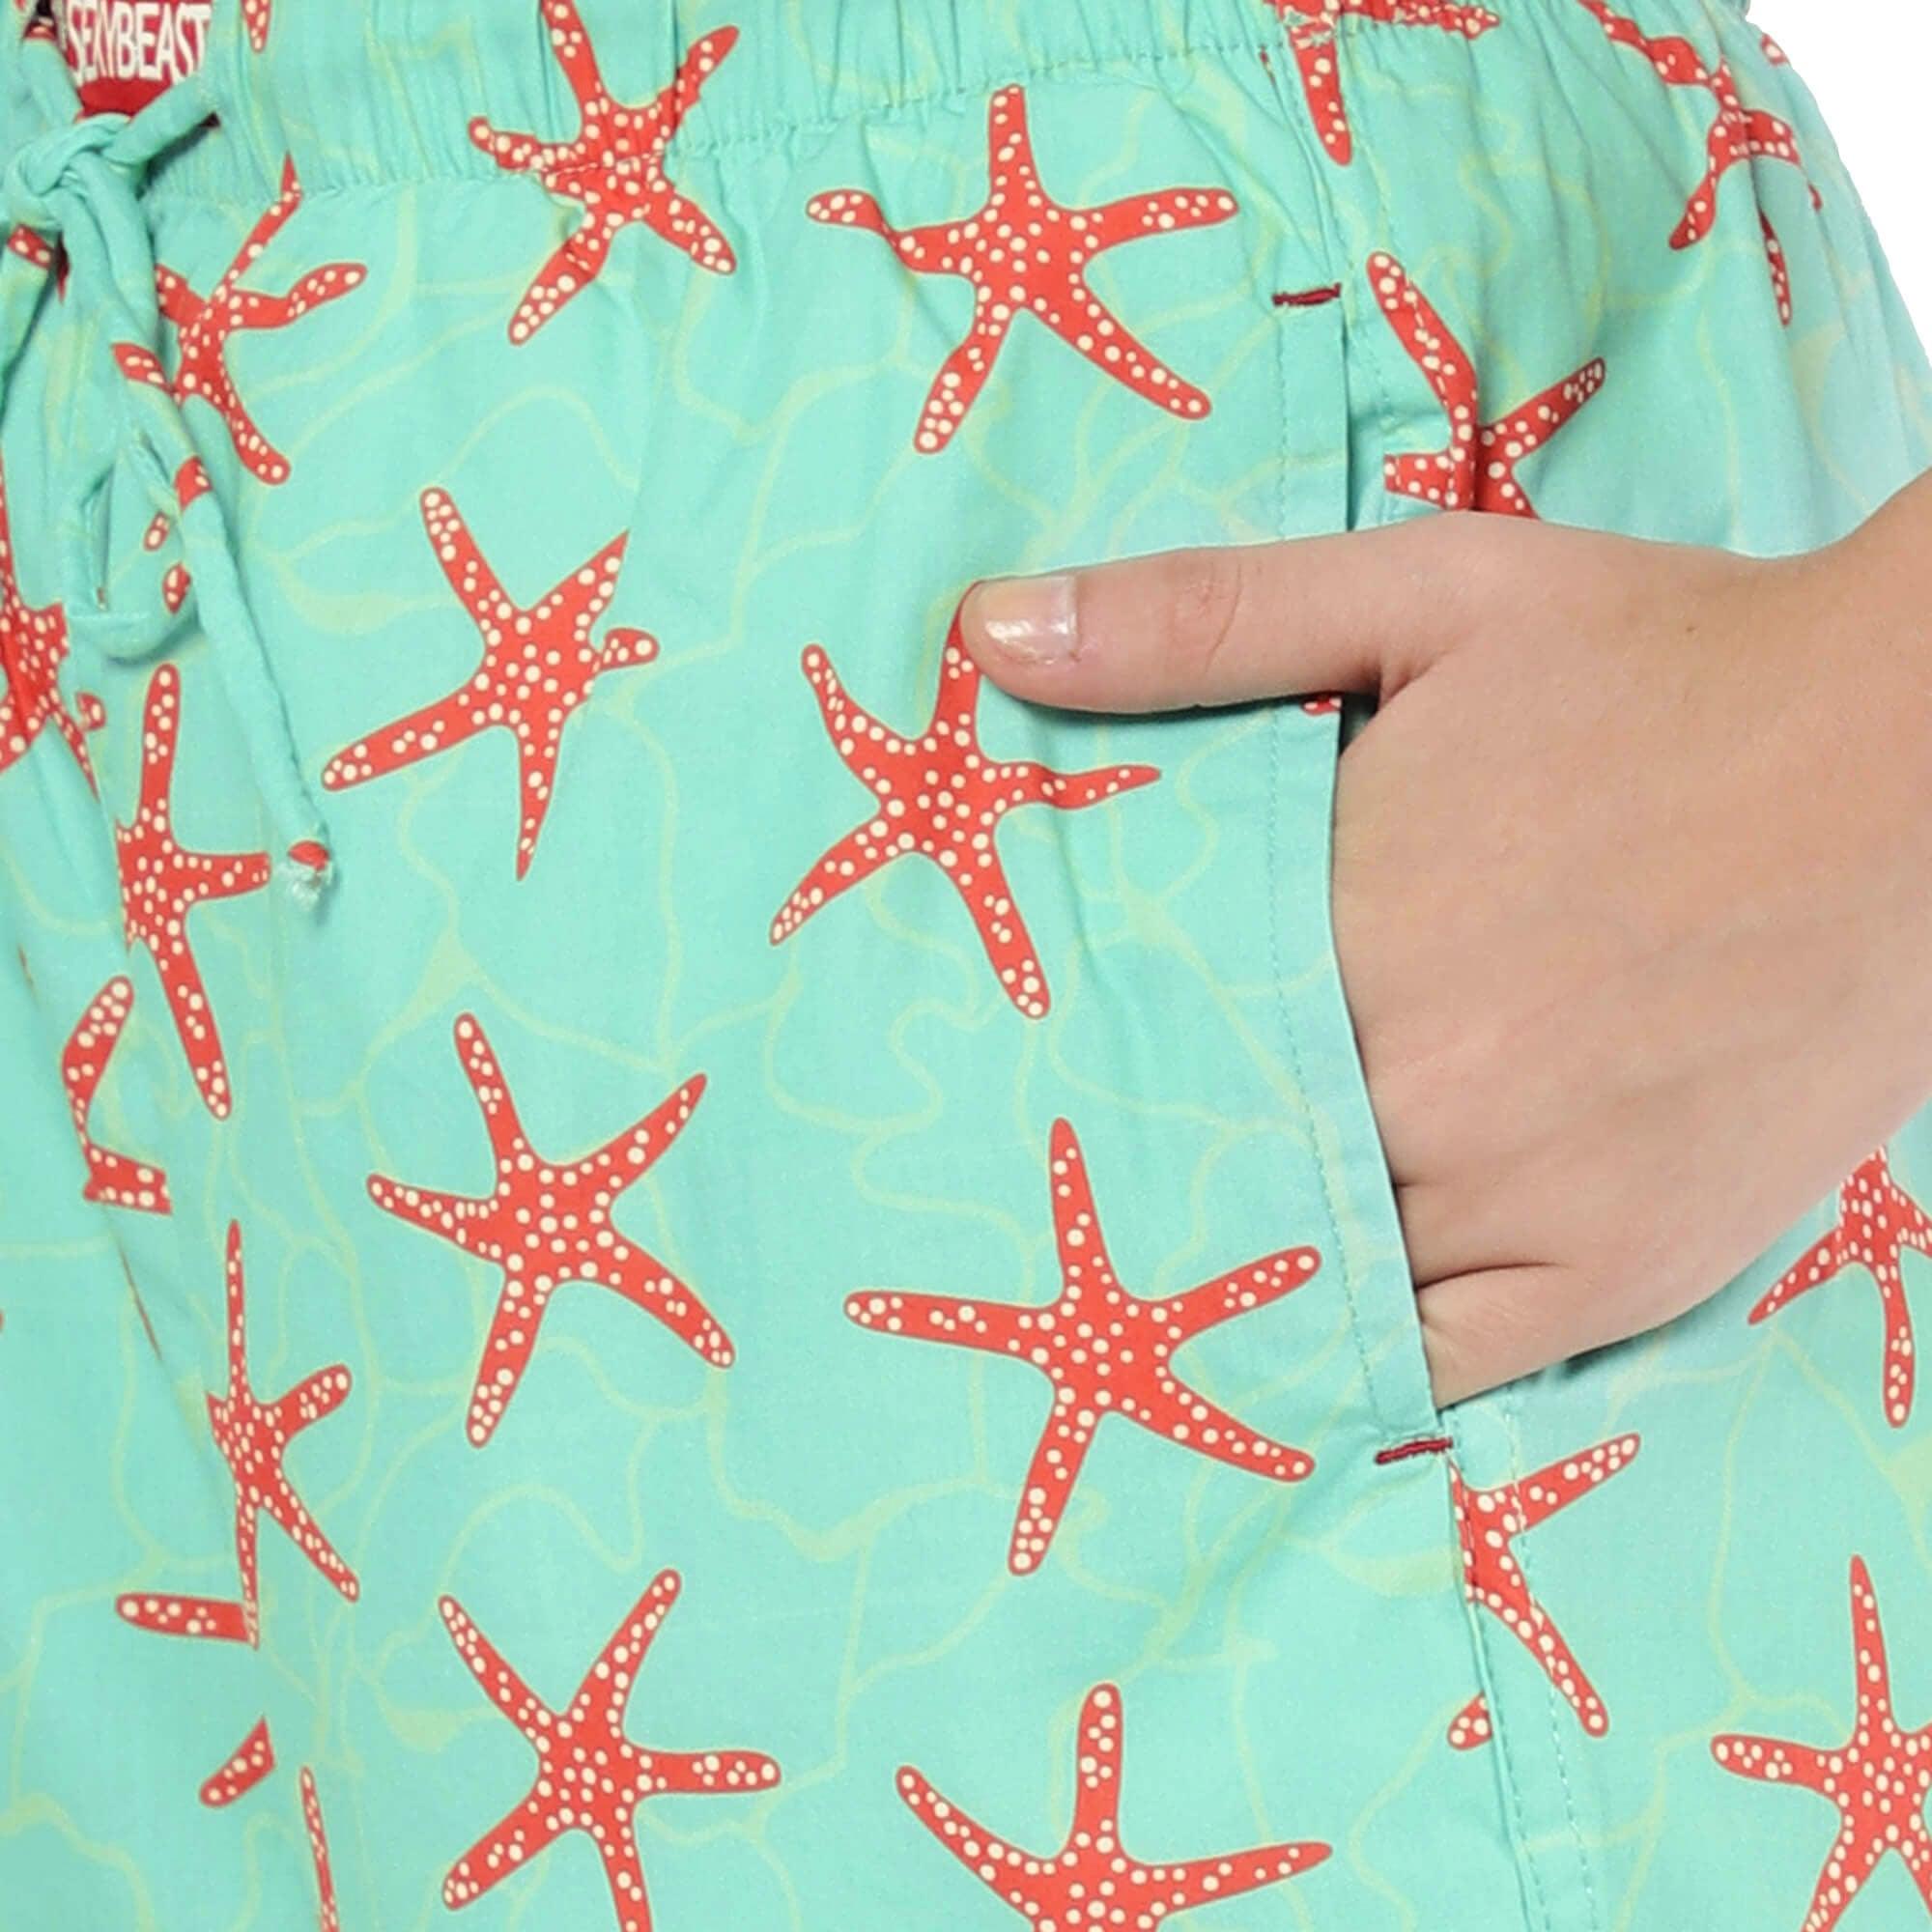 Starfish Boxer Shorts For Women